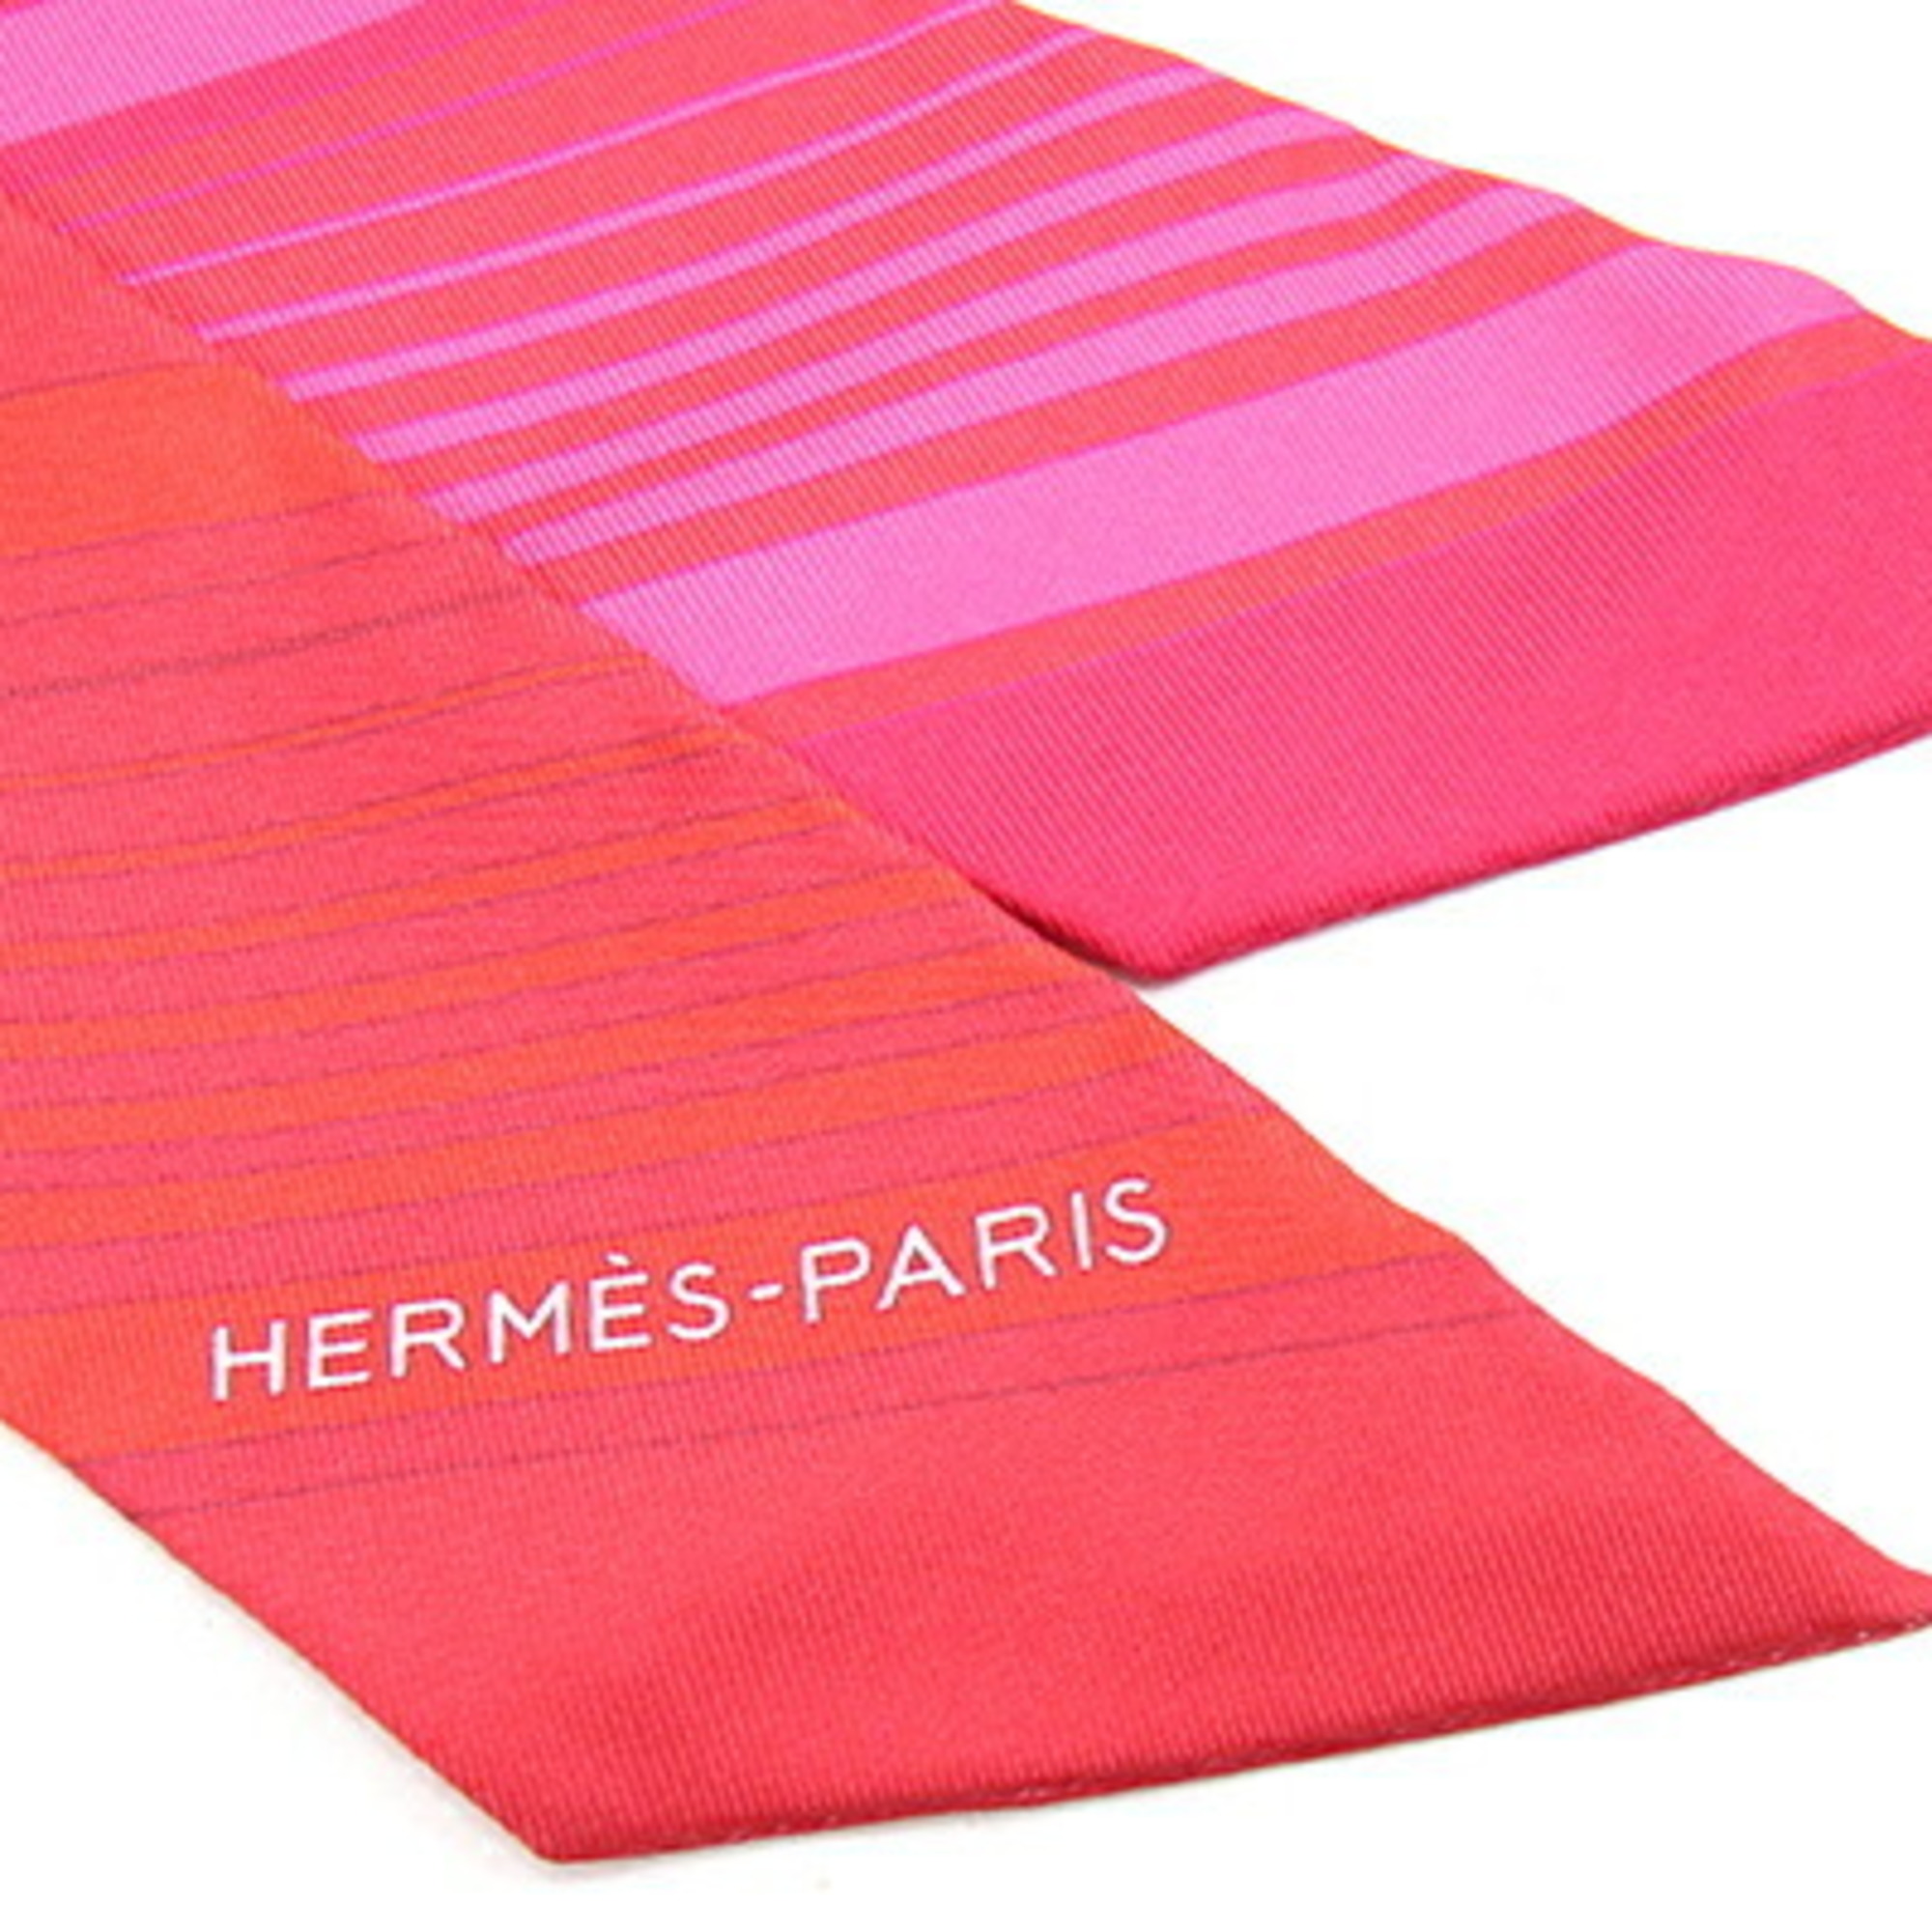 Hermes Scarf Muffler Twilly Ex-Libris 063791S 21 Red Pink 100% Silk Collection Women's EX-Libris HERMES